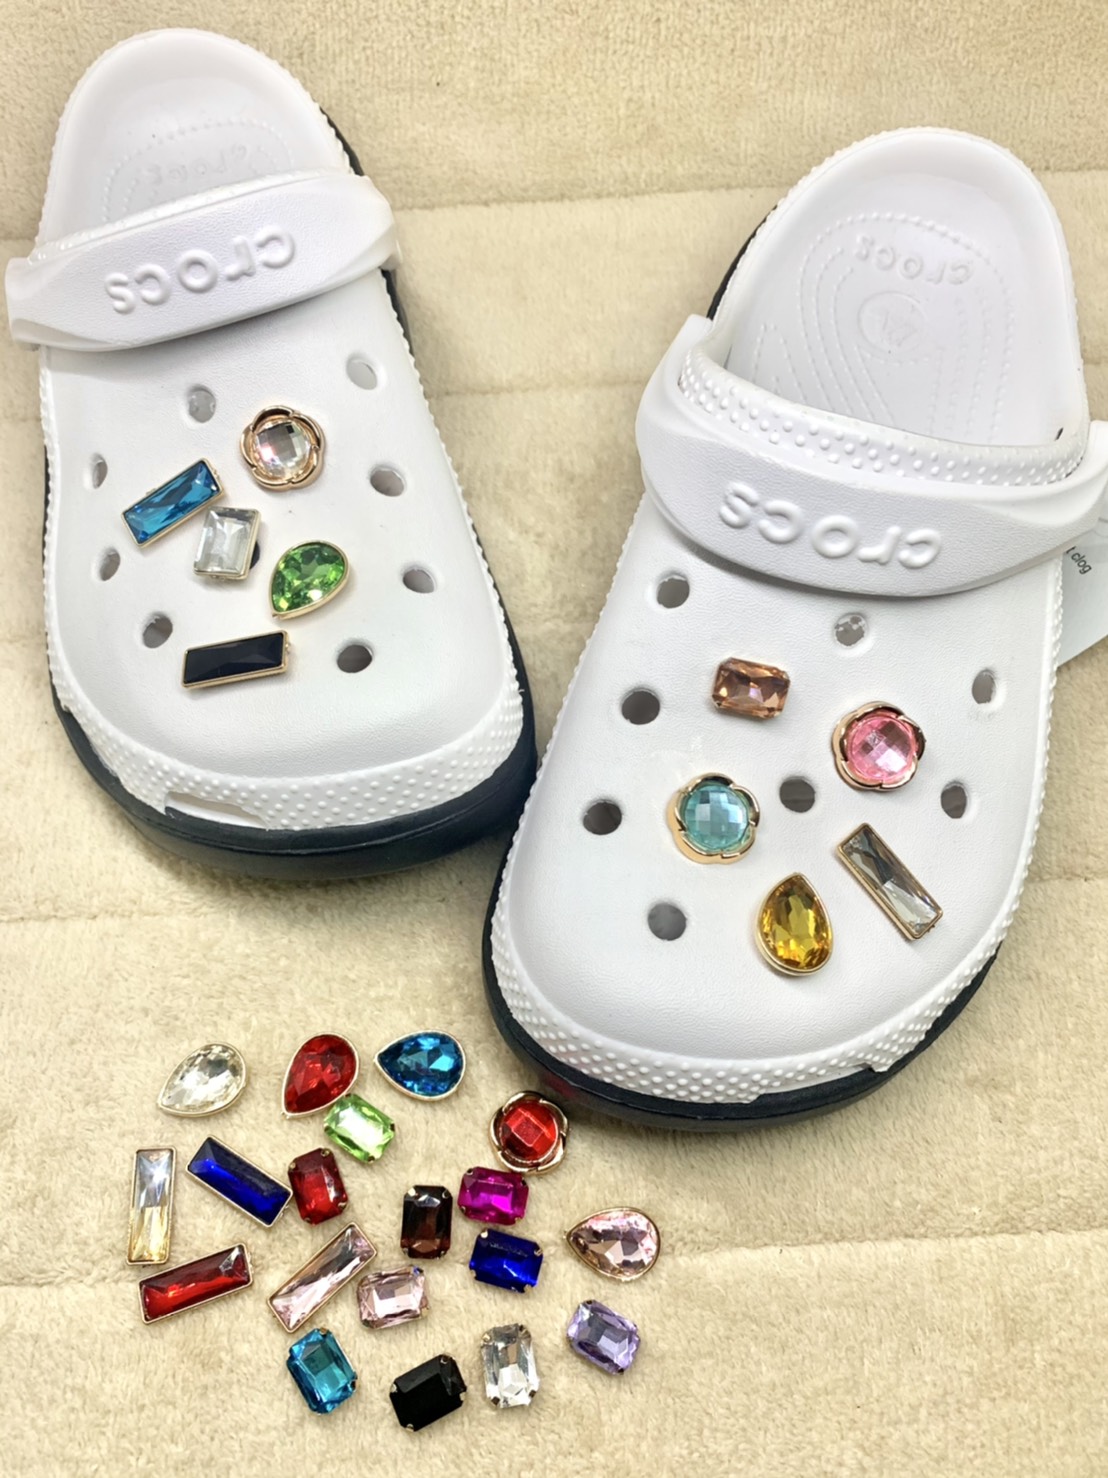 JBD-ตัวติดรองเท้ามีรู “เพชร” ??shoe Charm “Diamond “ เพิ่มความวิ้งค์ ให้รองเท้าคู่โปรด สำหรับรองเท้า Crocs Adda Monobo Mago Baoji...